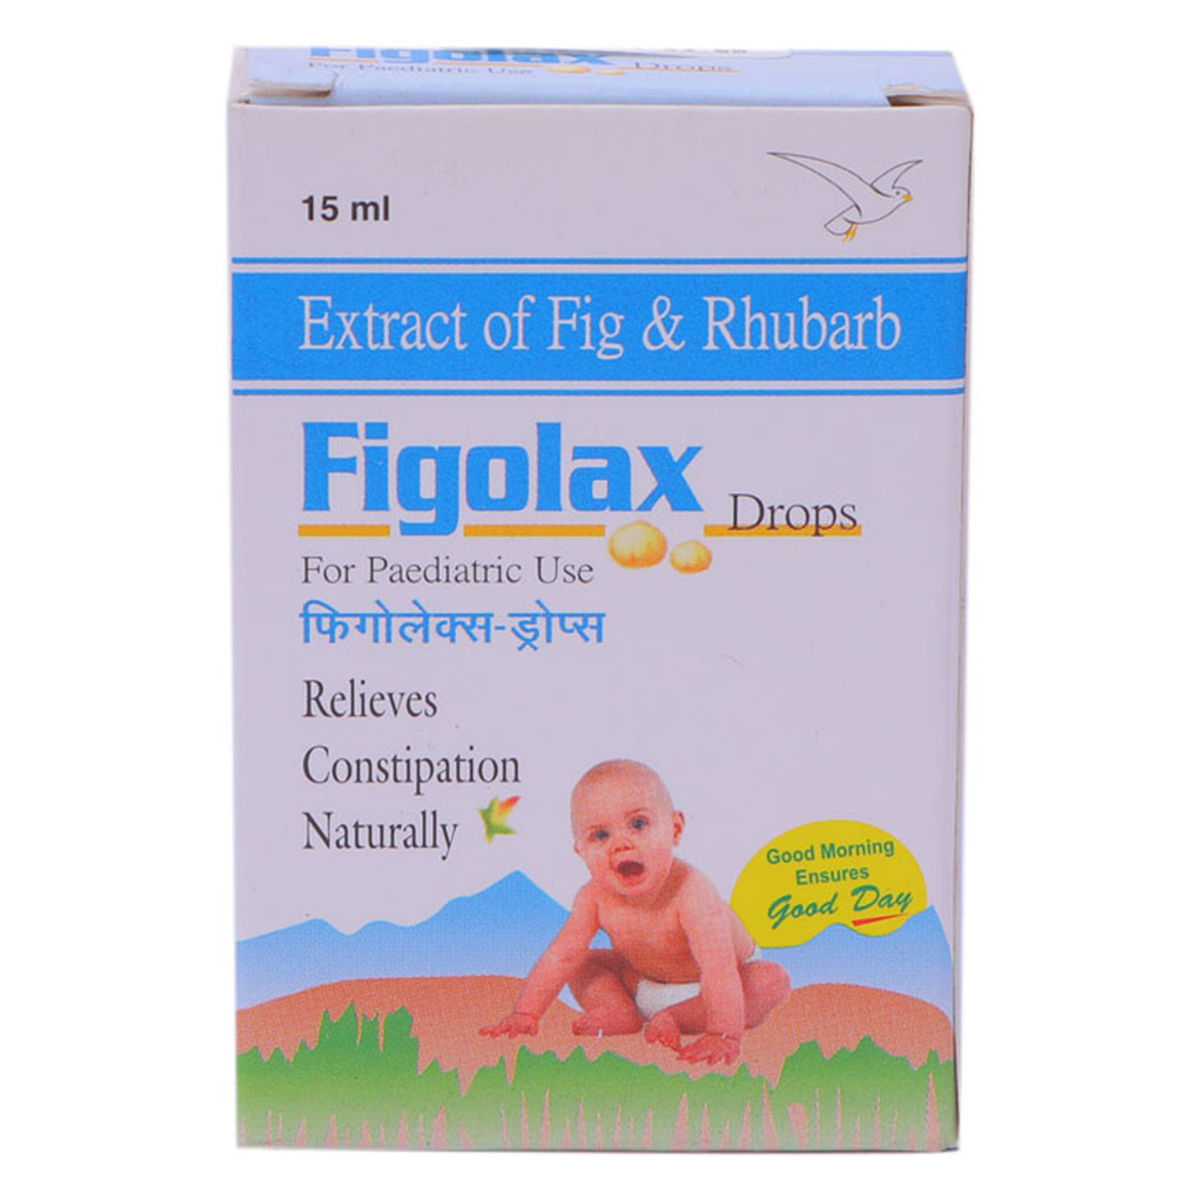 Buy Figolax Drops, 15 ml Online